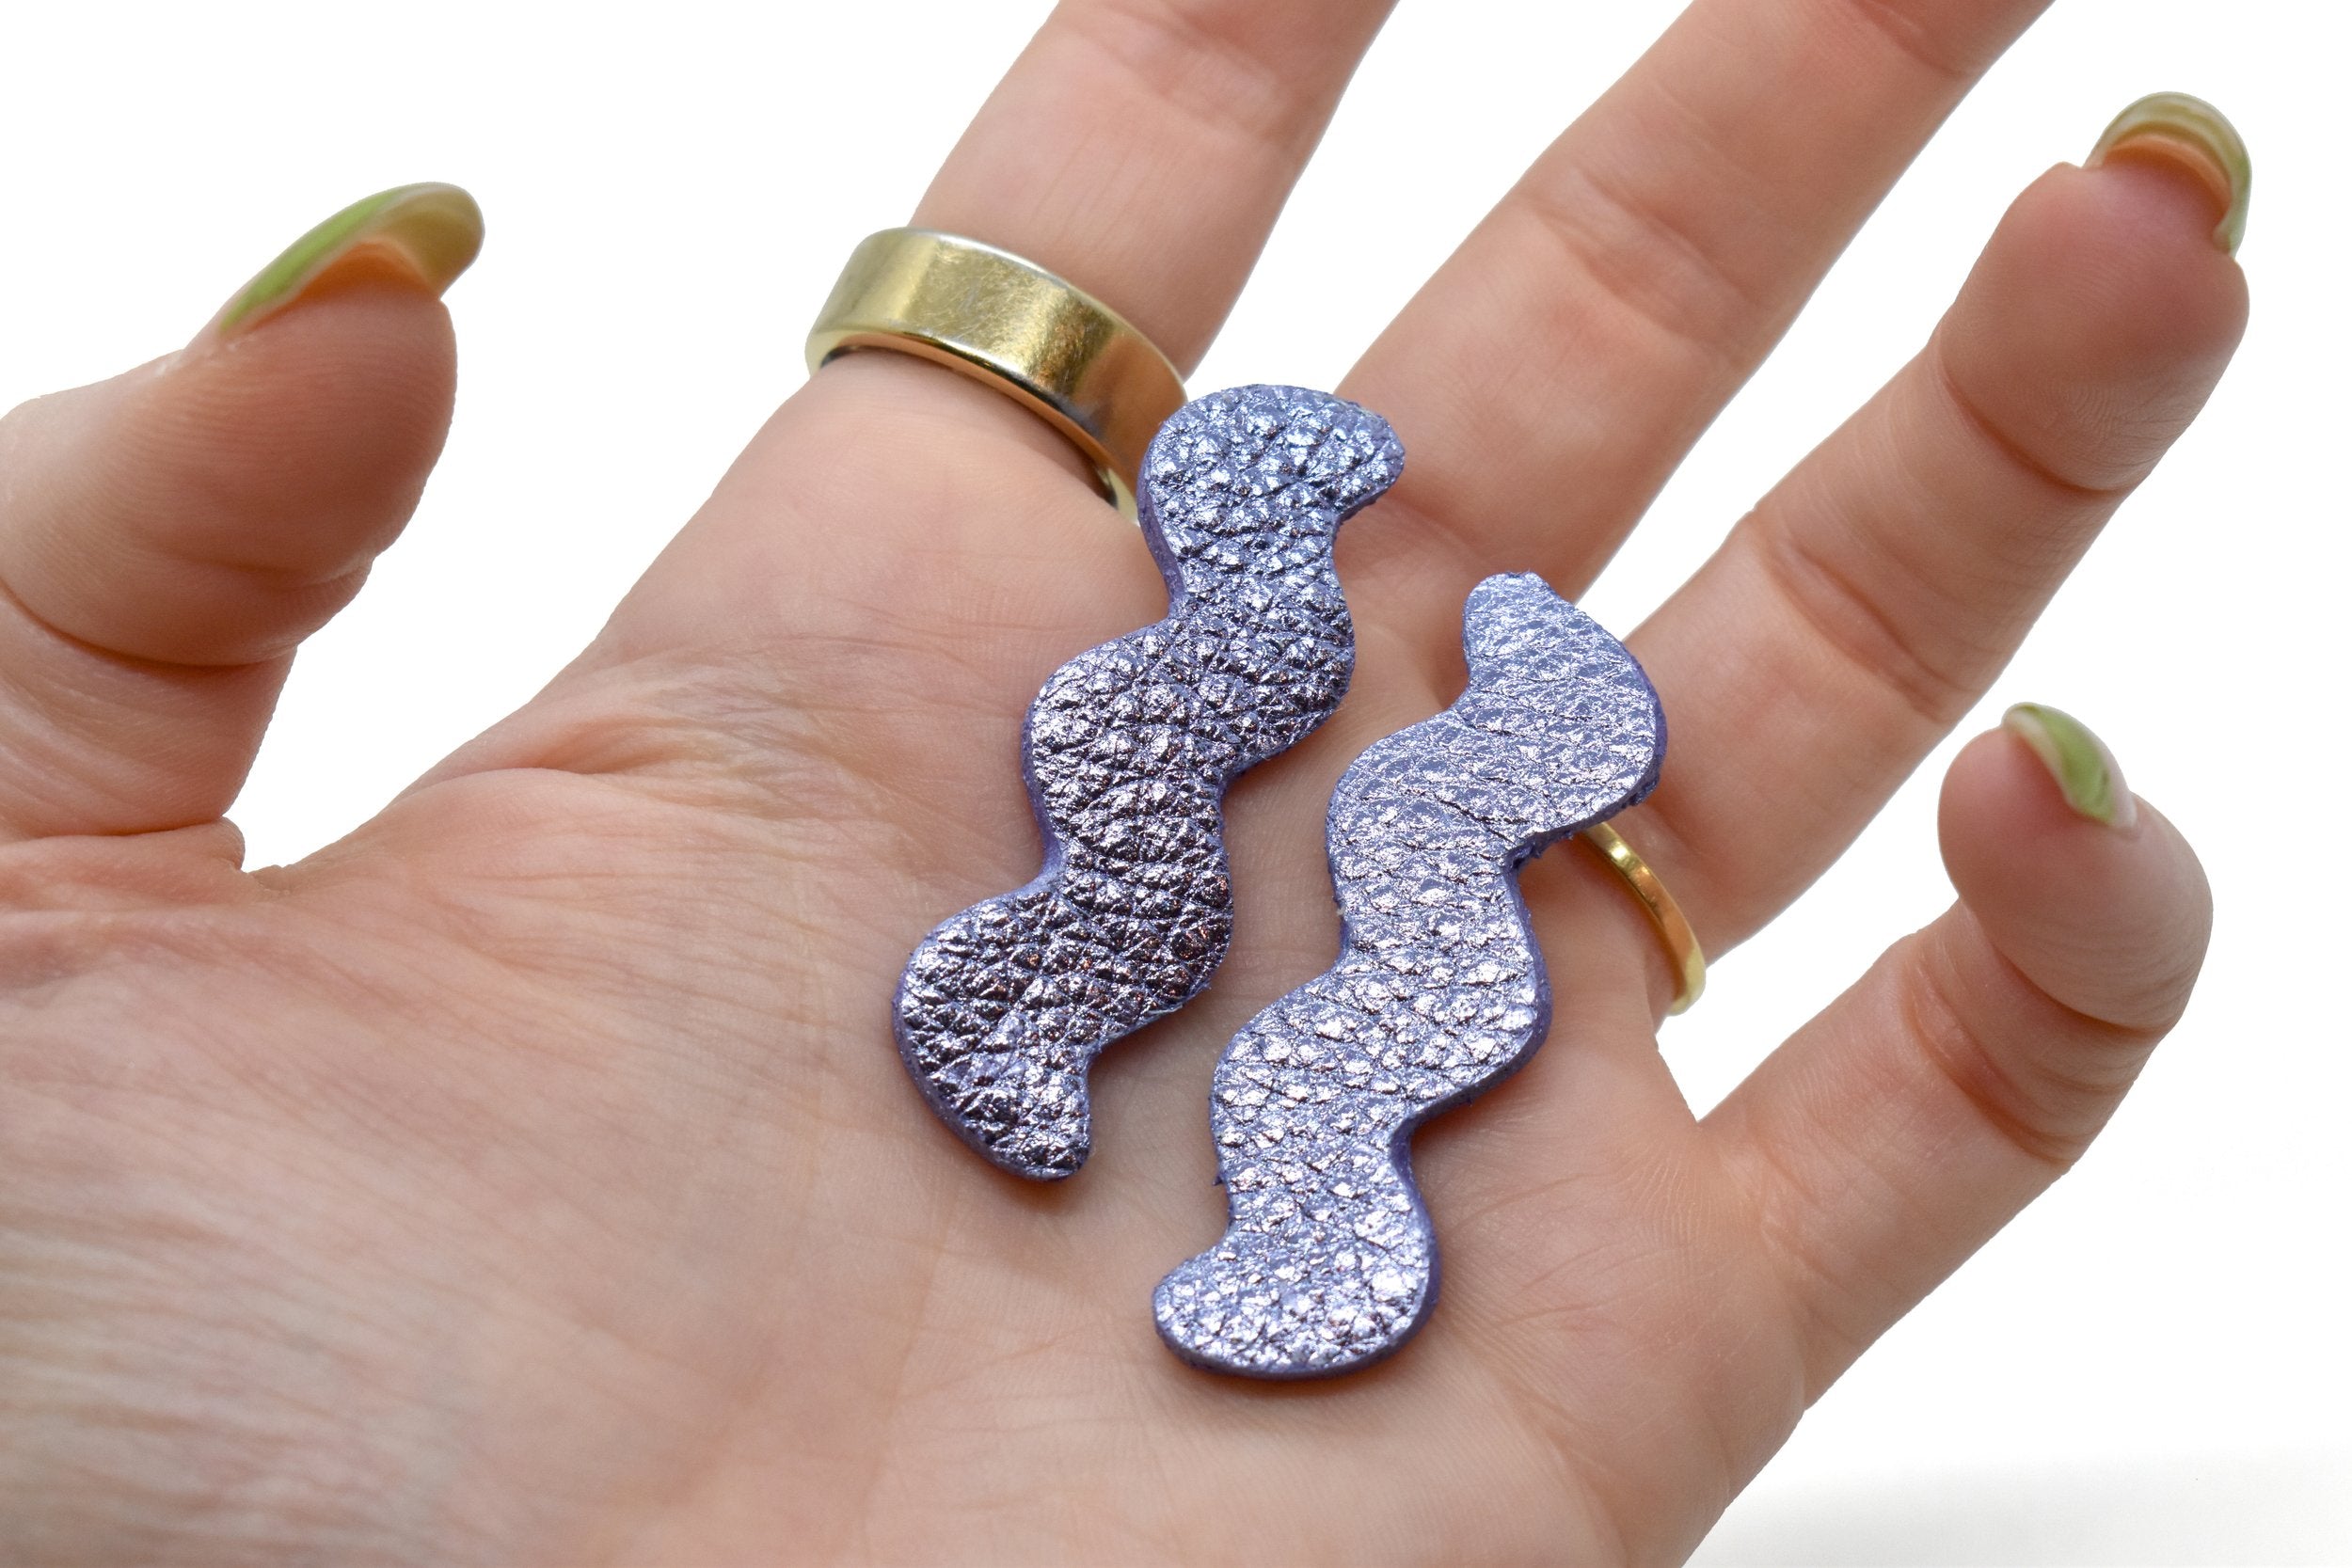 hand holding Metallic Purple Zigzag Statement Earrings, Leather Matisse Earrings in Metallic Purple